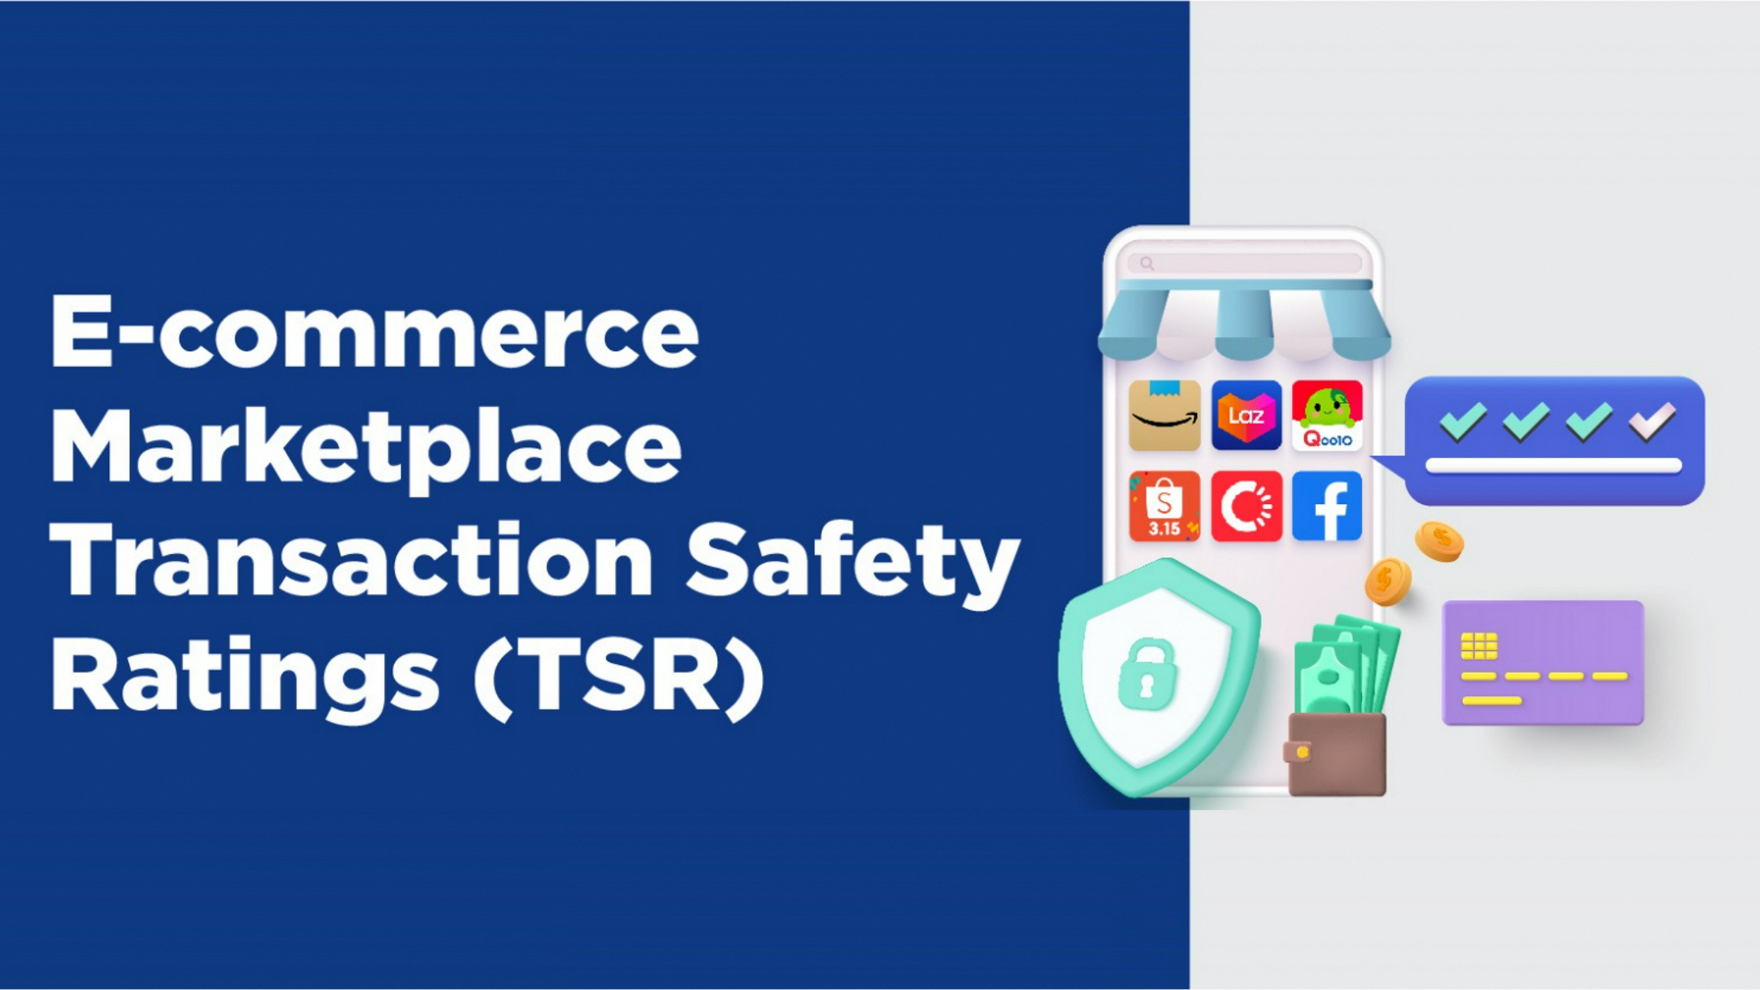 E-commerce Marketplace Transaction Safety Ratings